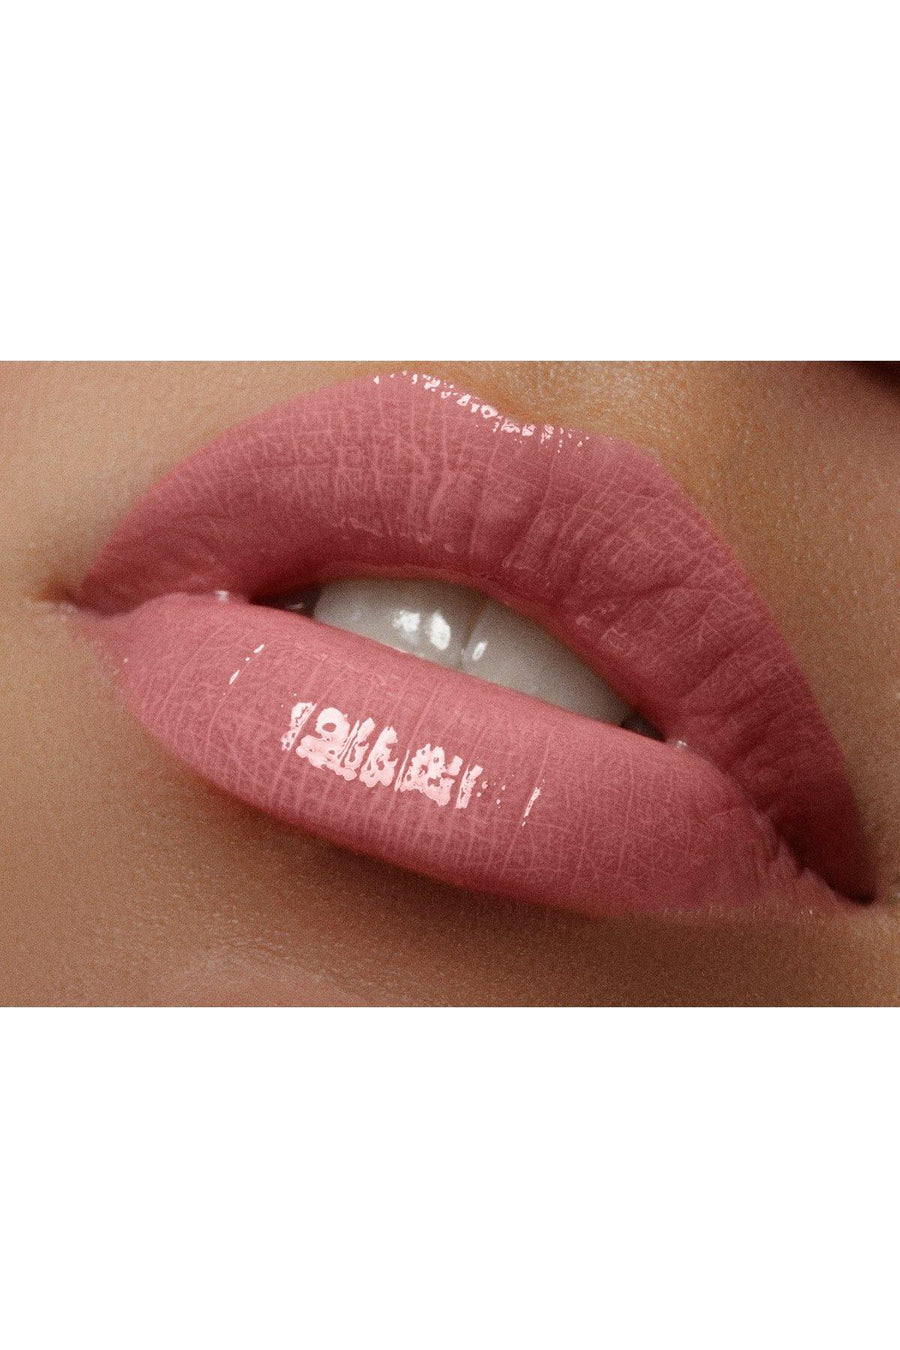 Lip Gloss #2 - Sandstorm - Blend Mineral Cosmetics